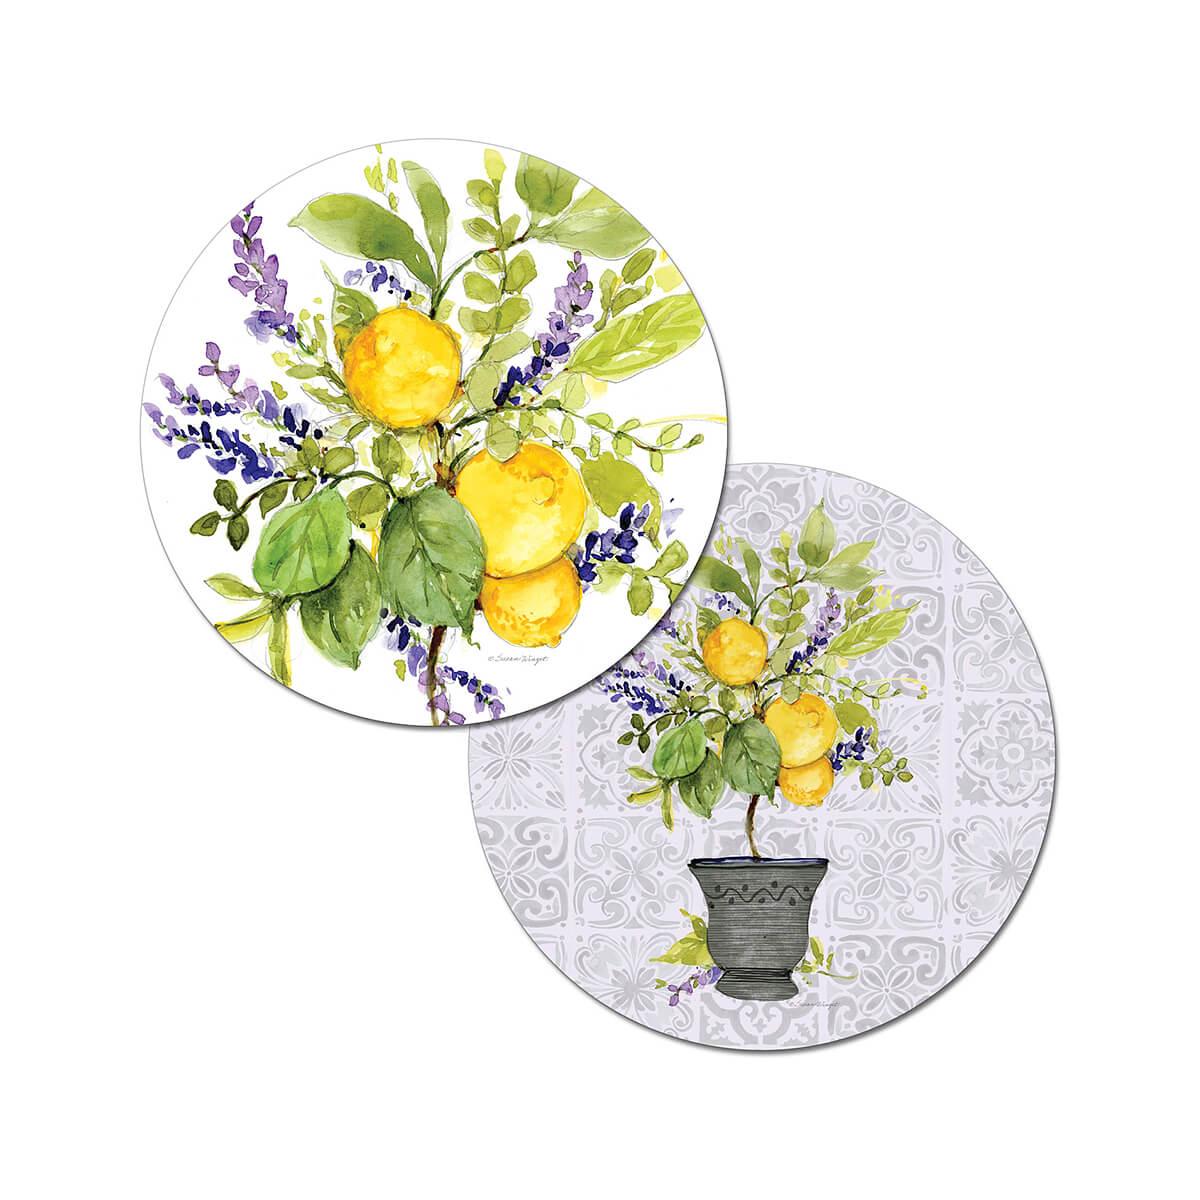  Reversible Round Placemat - Watercolor Lemons